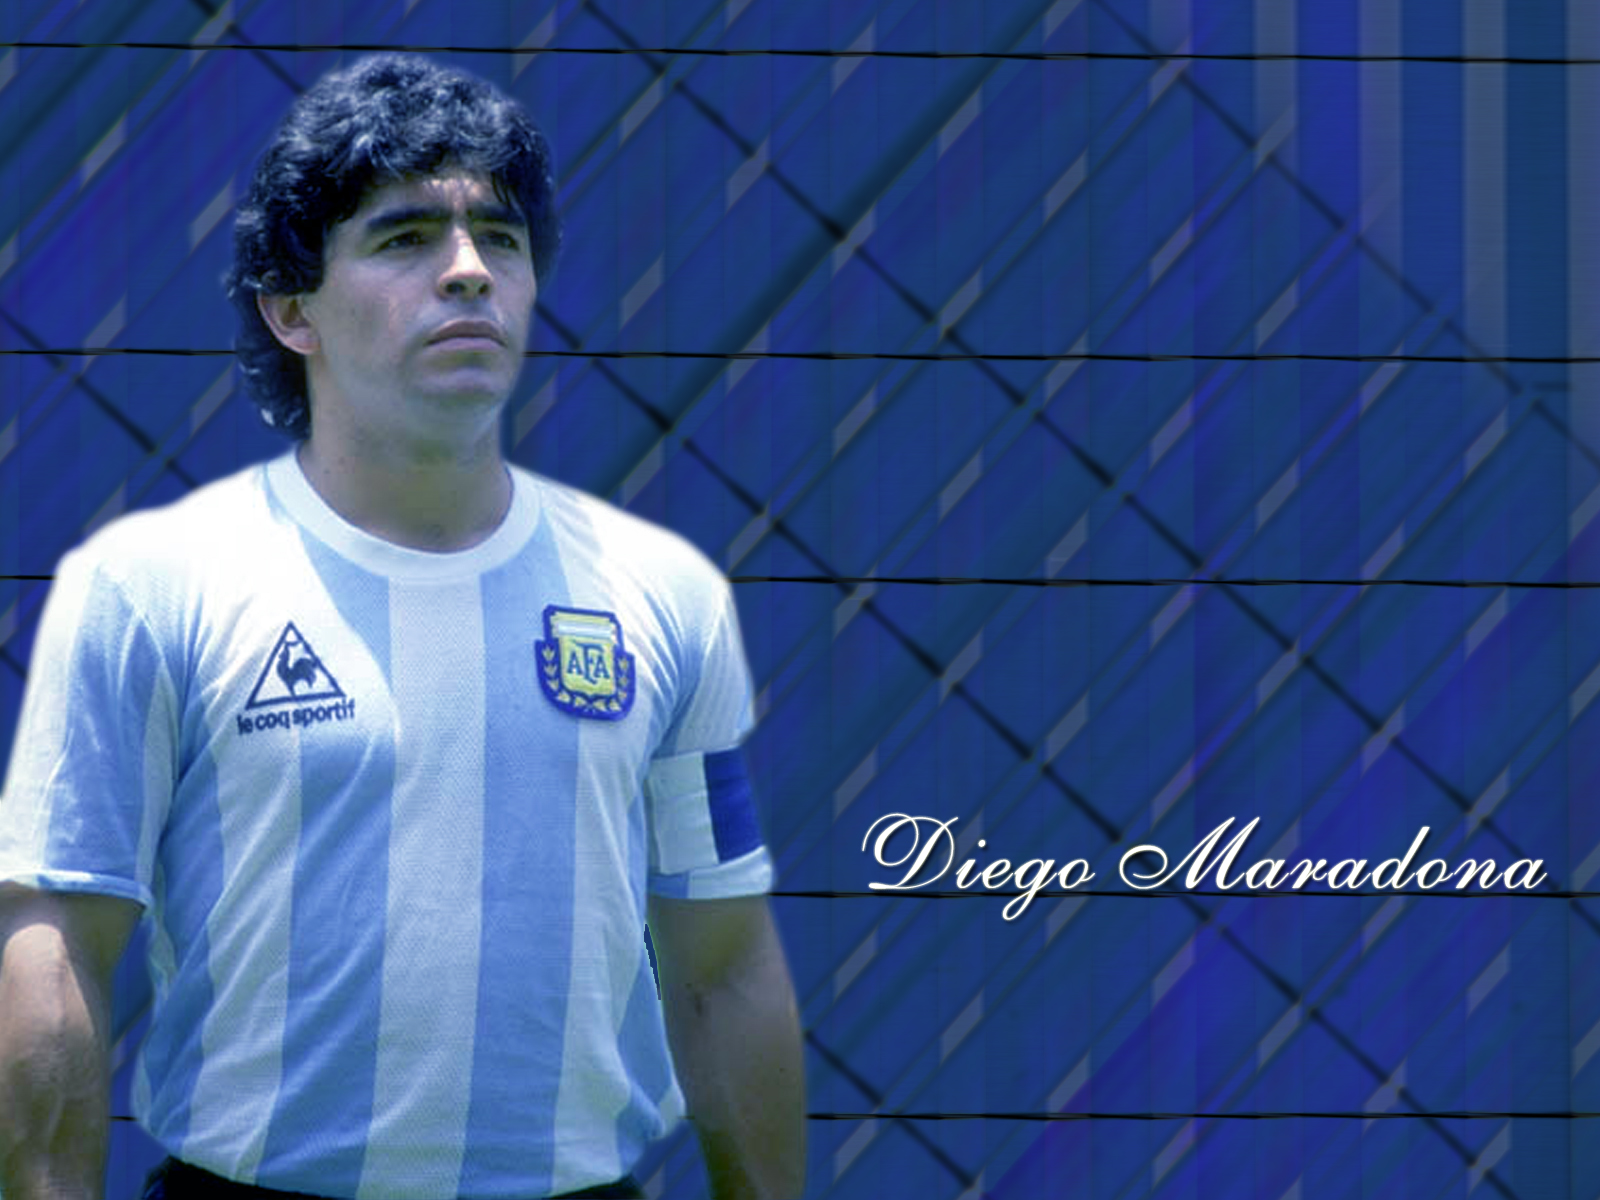 http://2.bp.blogspot.com/-v42VcDvt0cQ/Tu3yJgg-4yI/AAAAAAAAIaw/ZWGhdeUkxpU/s1600/Diego-Maradona-Wallpaper1.jpg